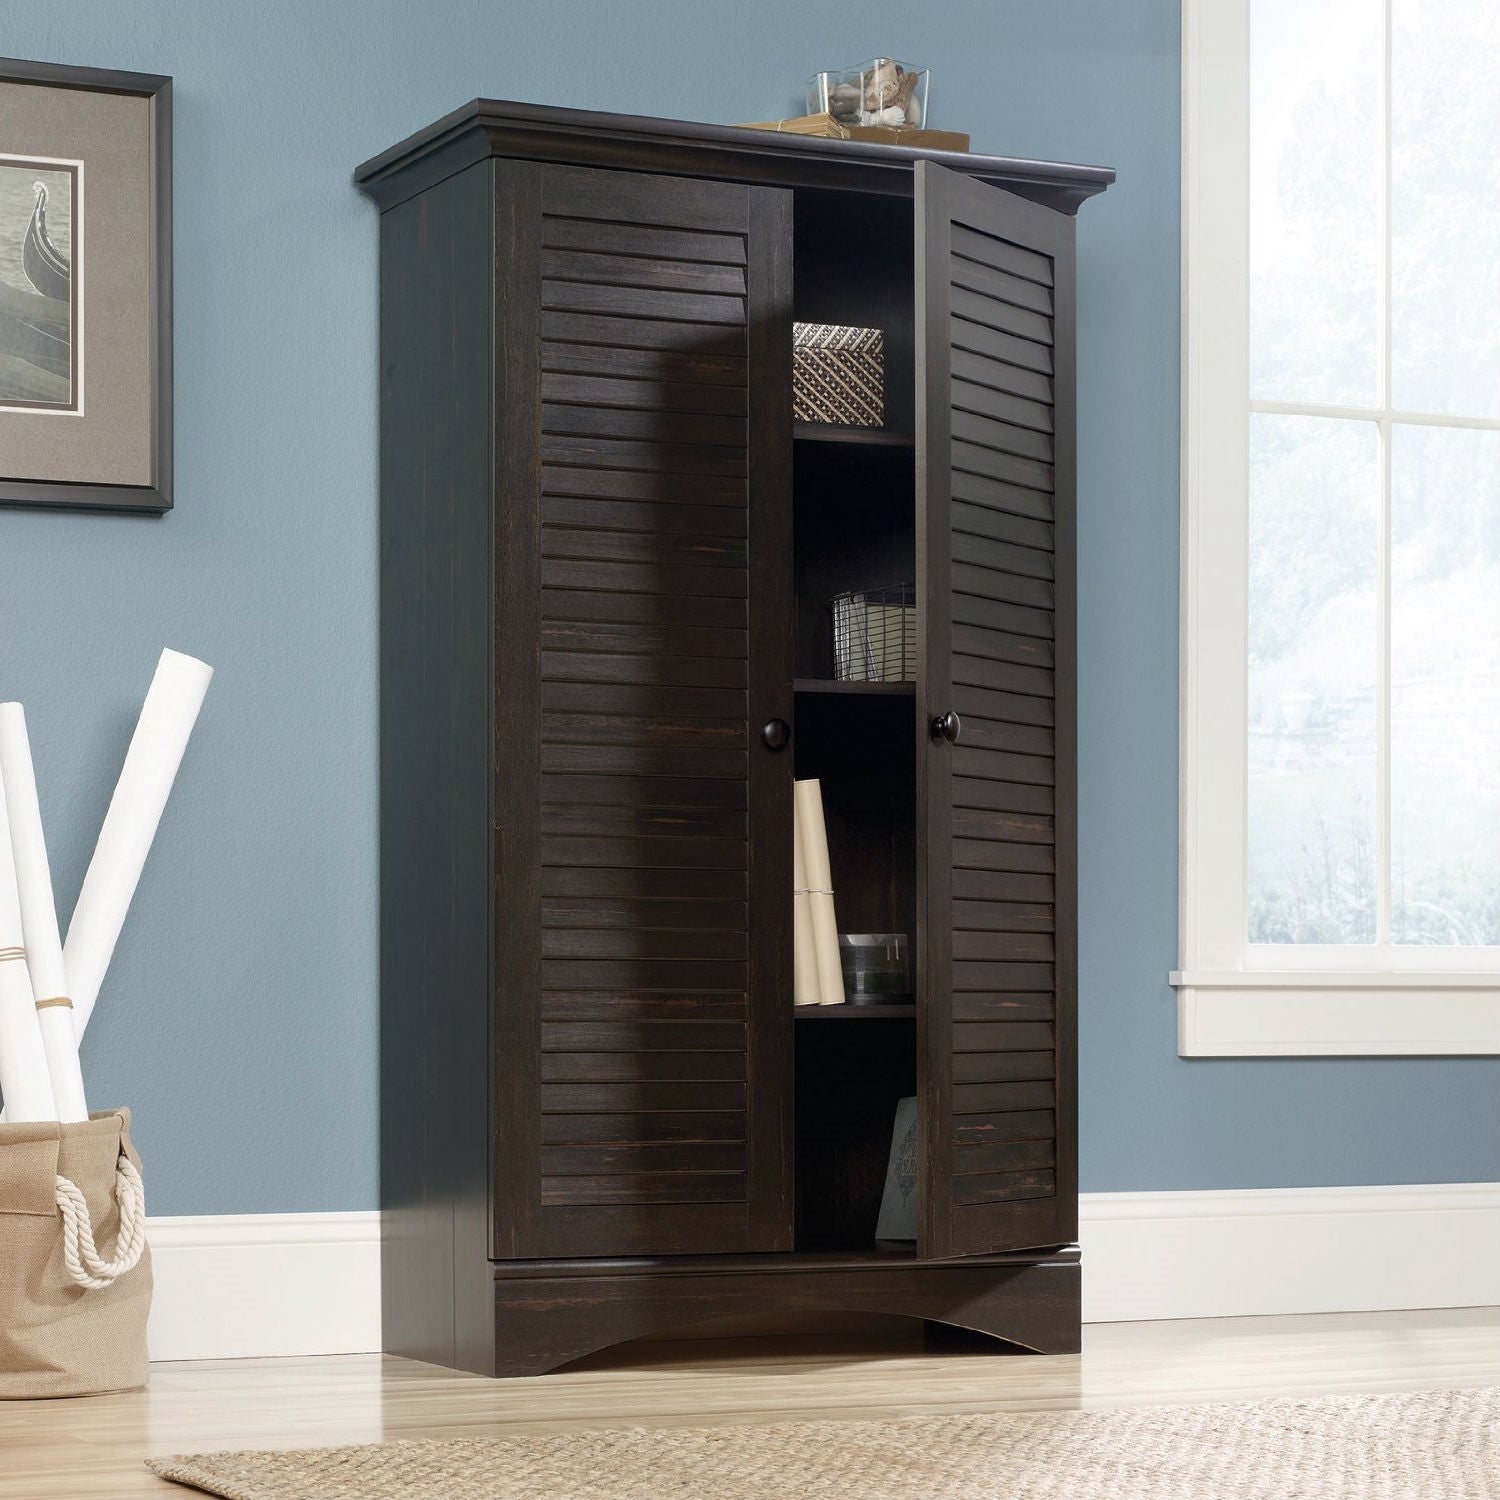 FastFurnishings Multi-Purpose Wardrobe Armoire Storage Cabinet in Dark Brown Antique Wood Finish